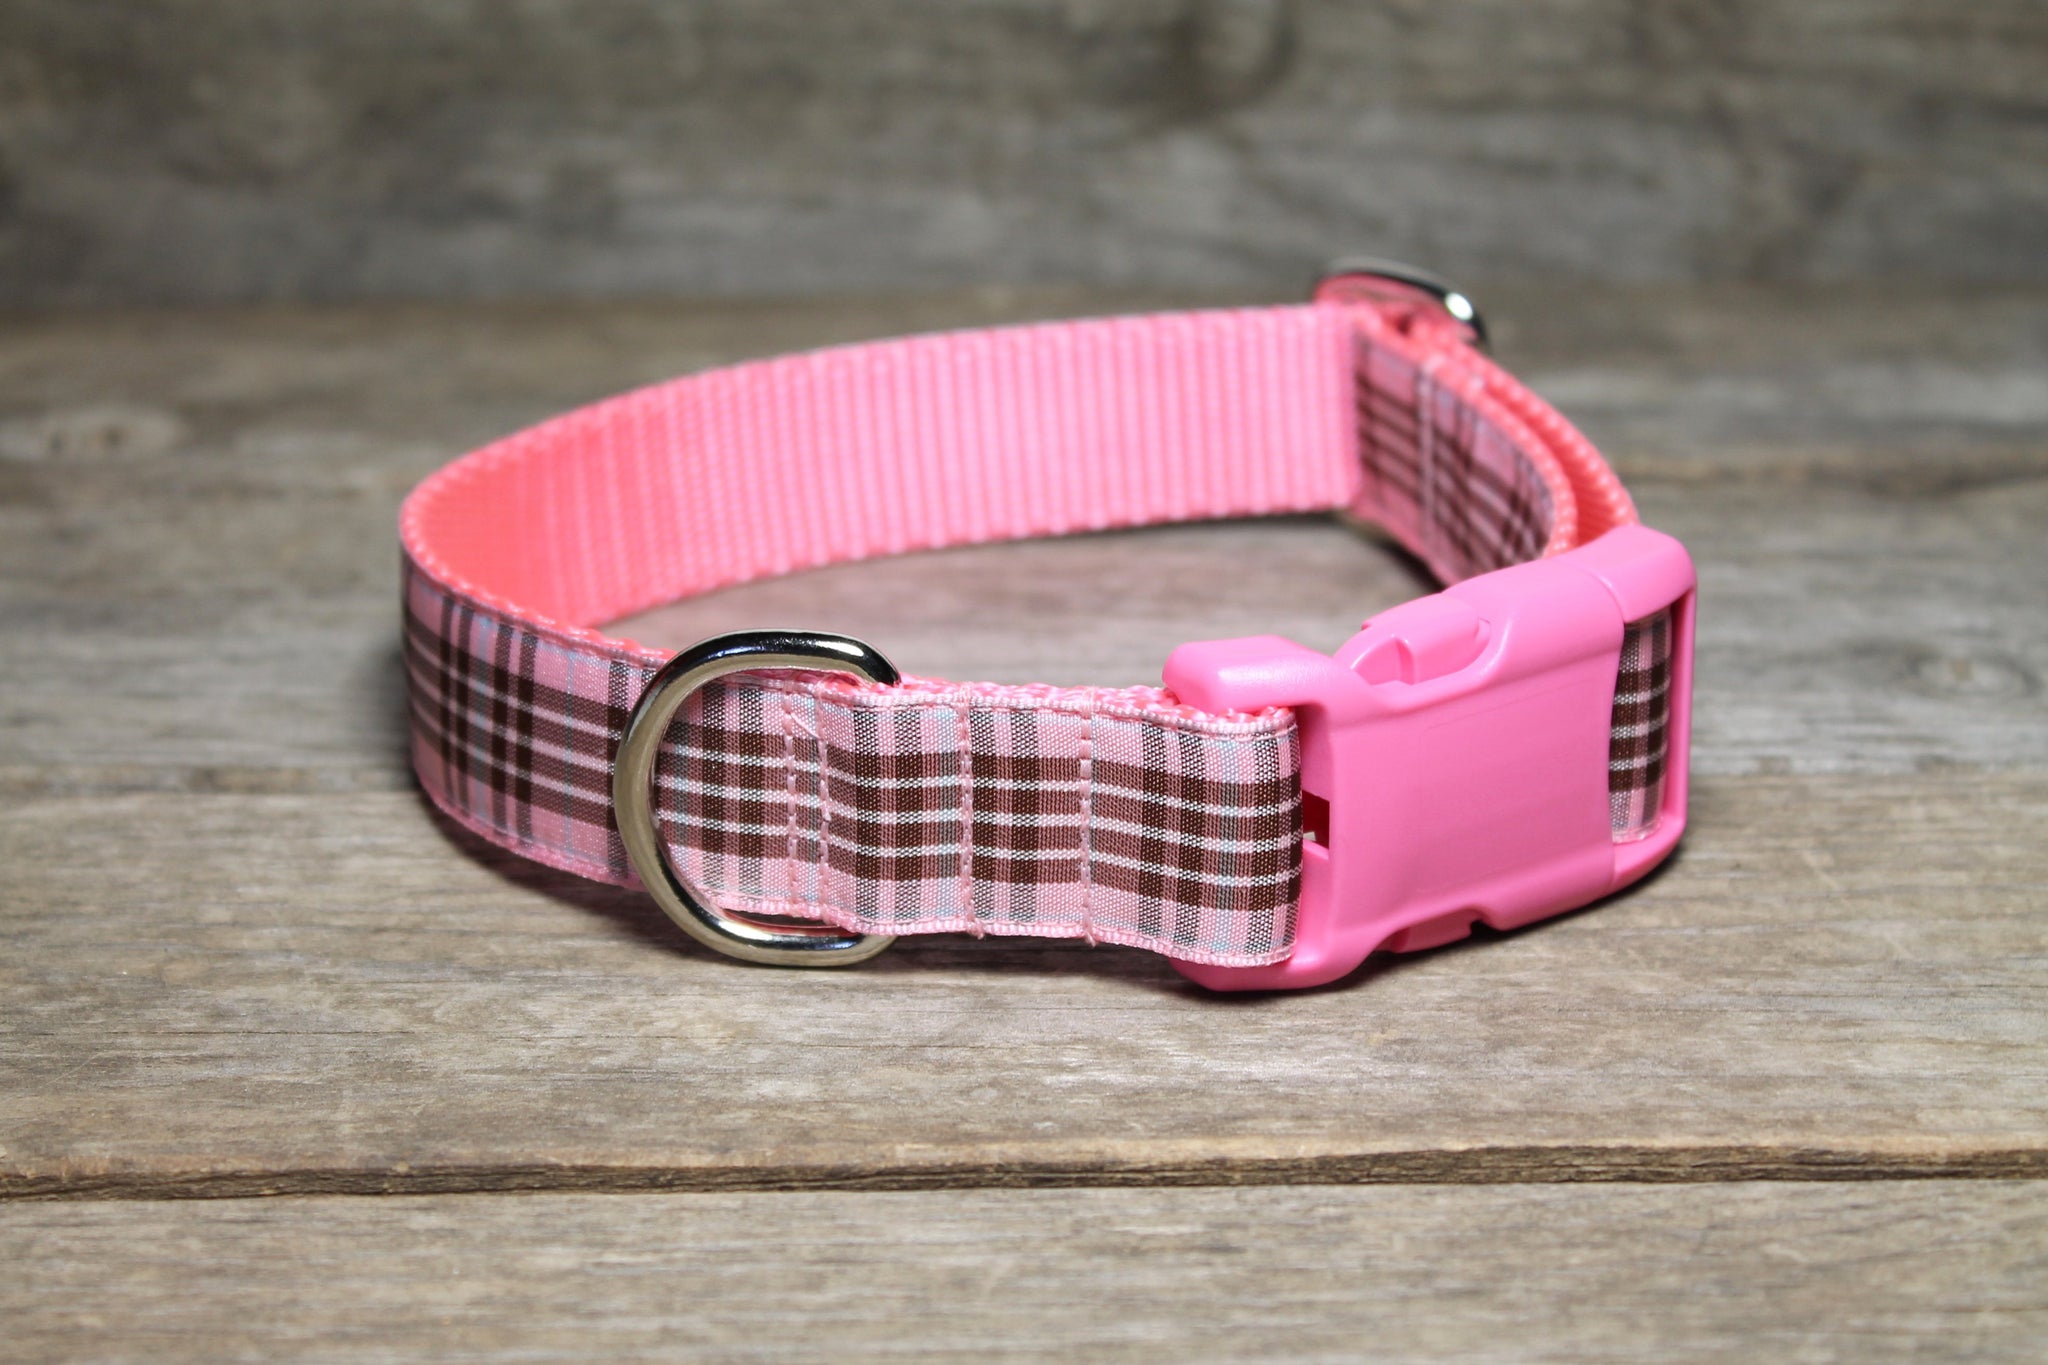 Raspberry tartan - dog collar